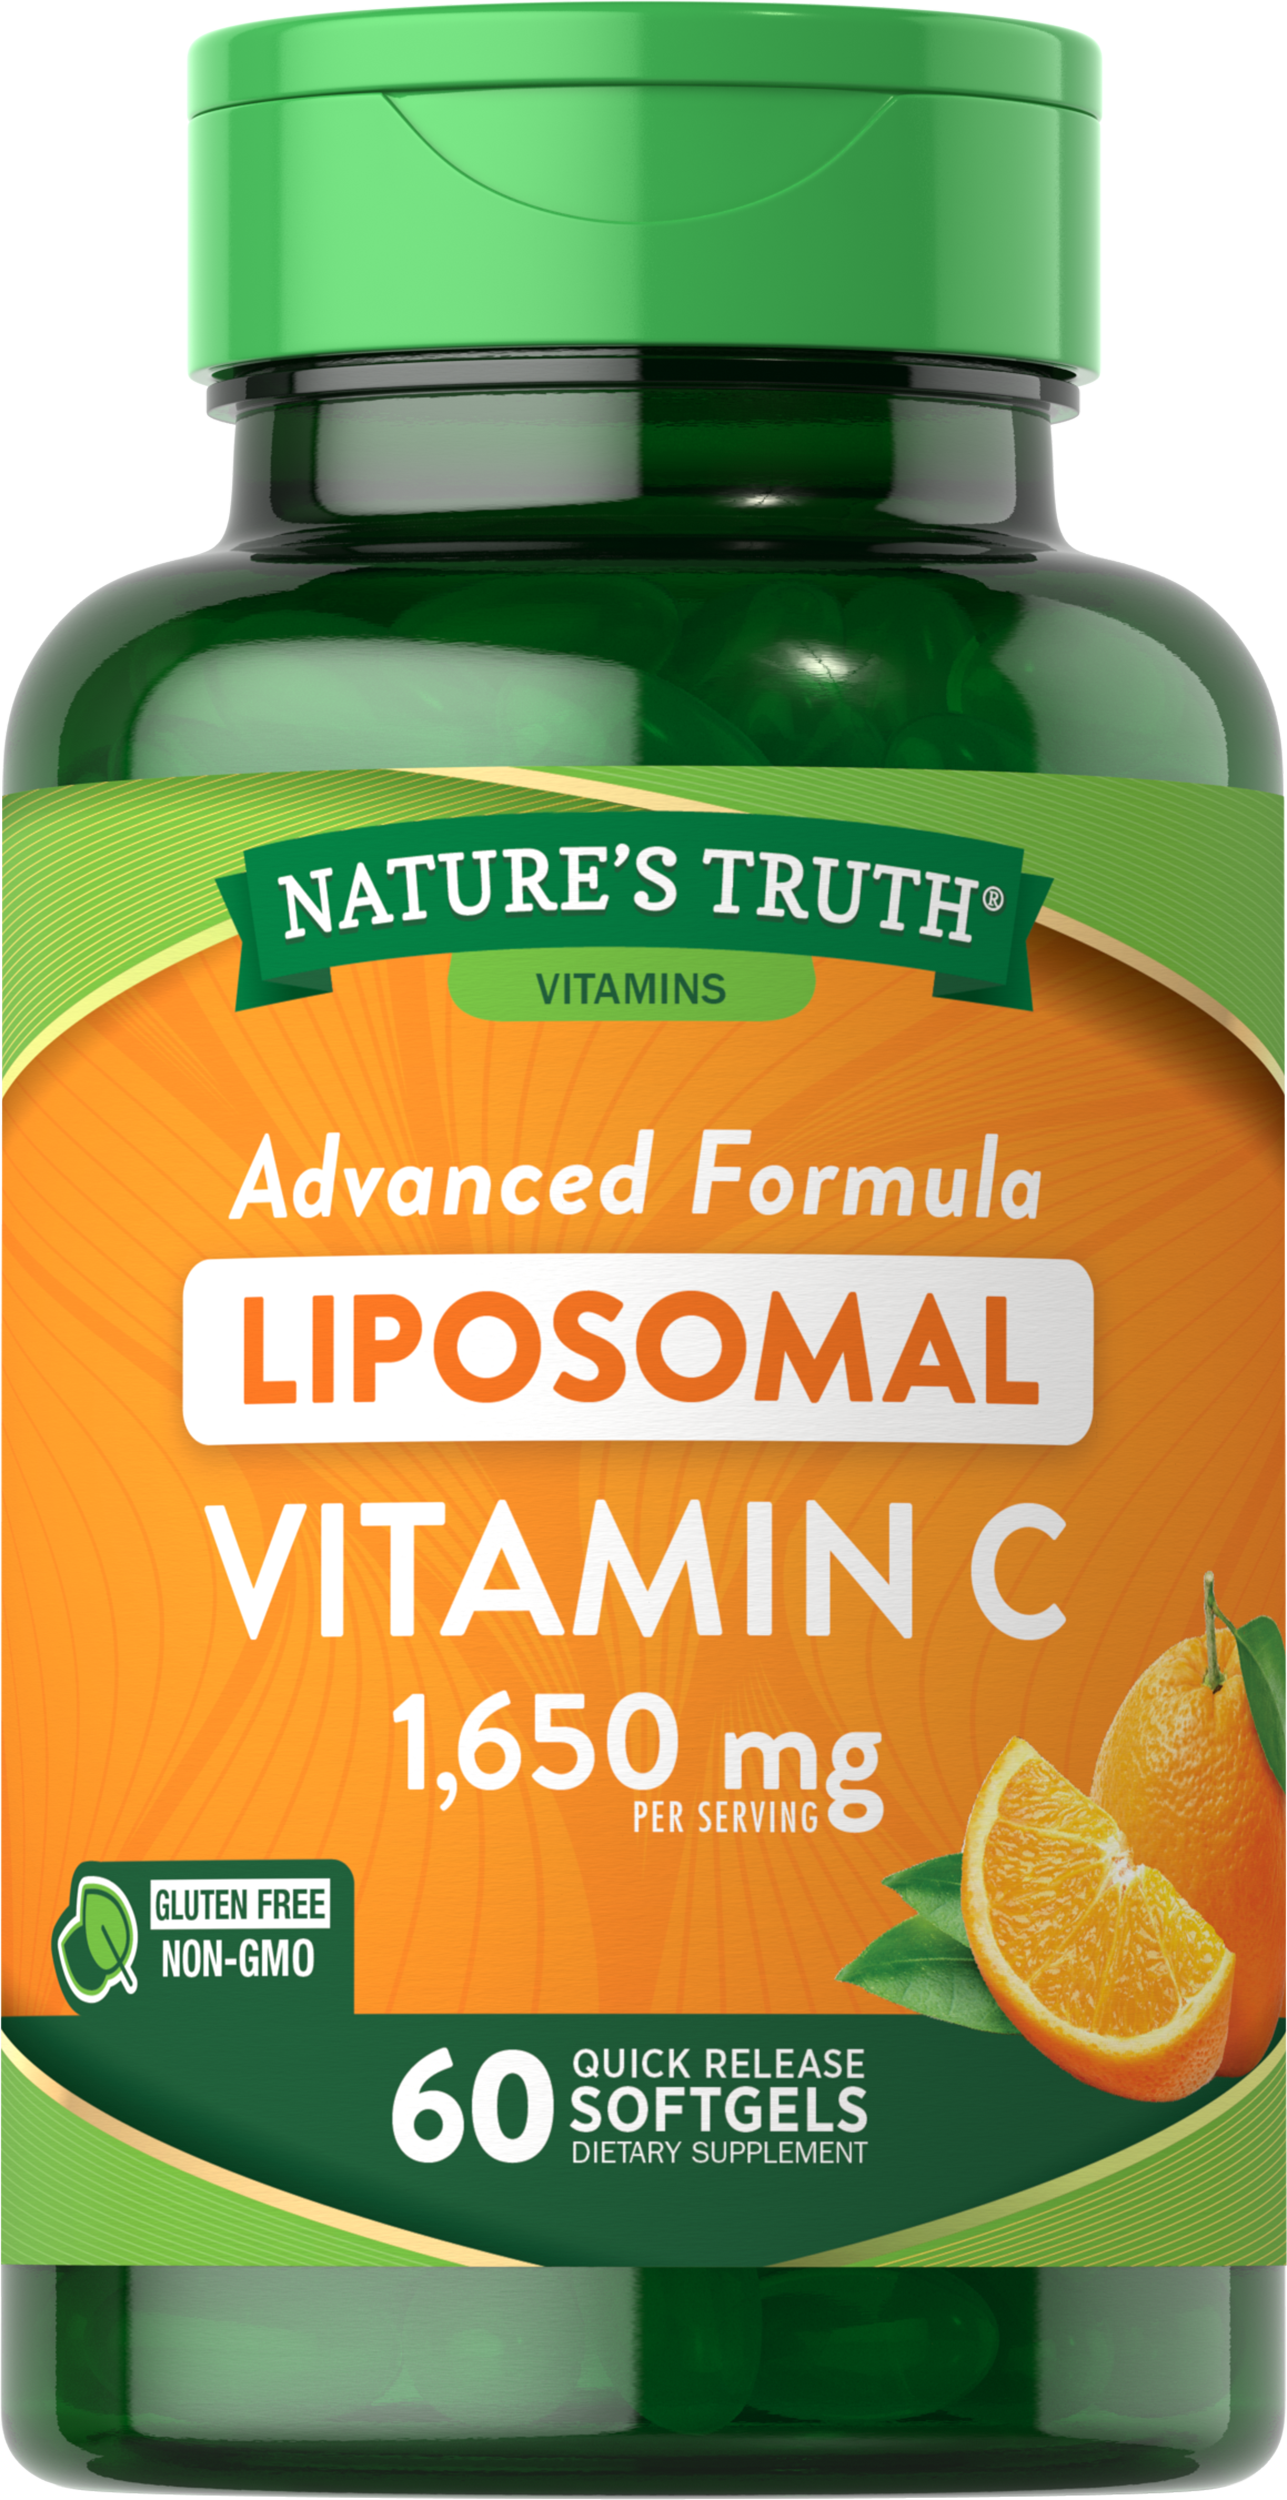 Liposomal Vitamin C 1650 mg